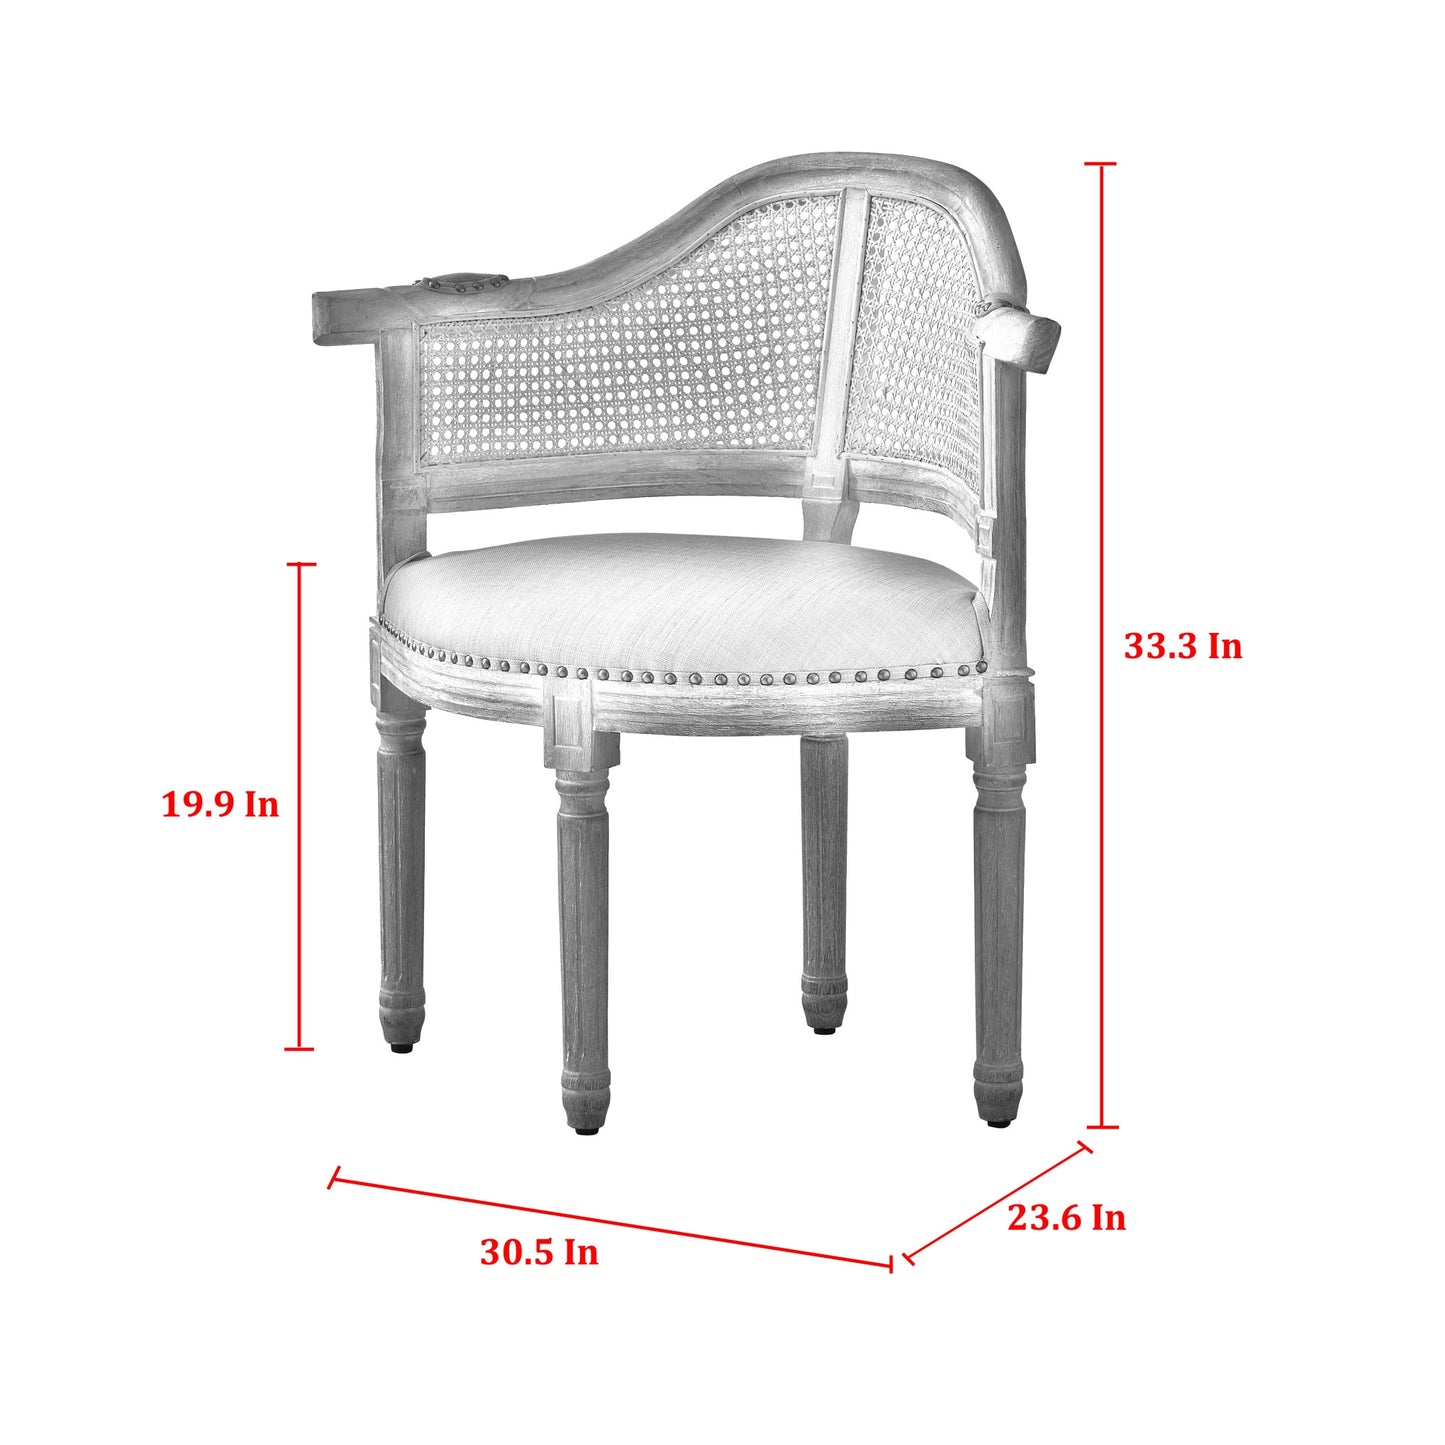 24" Beige Linen Arm Chair